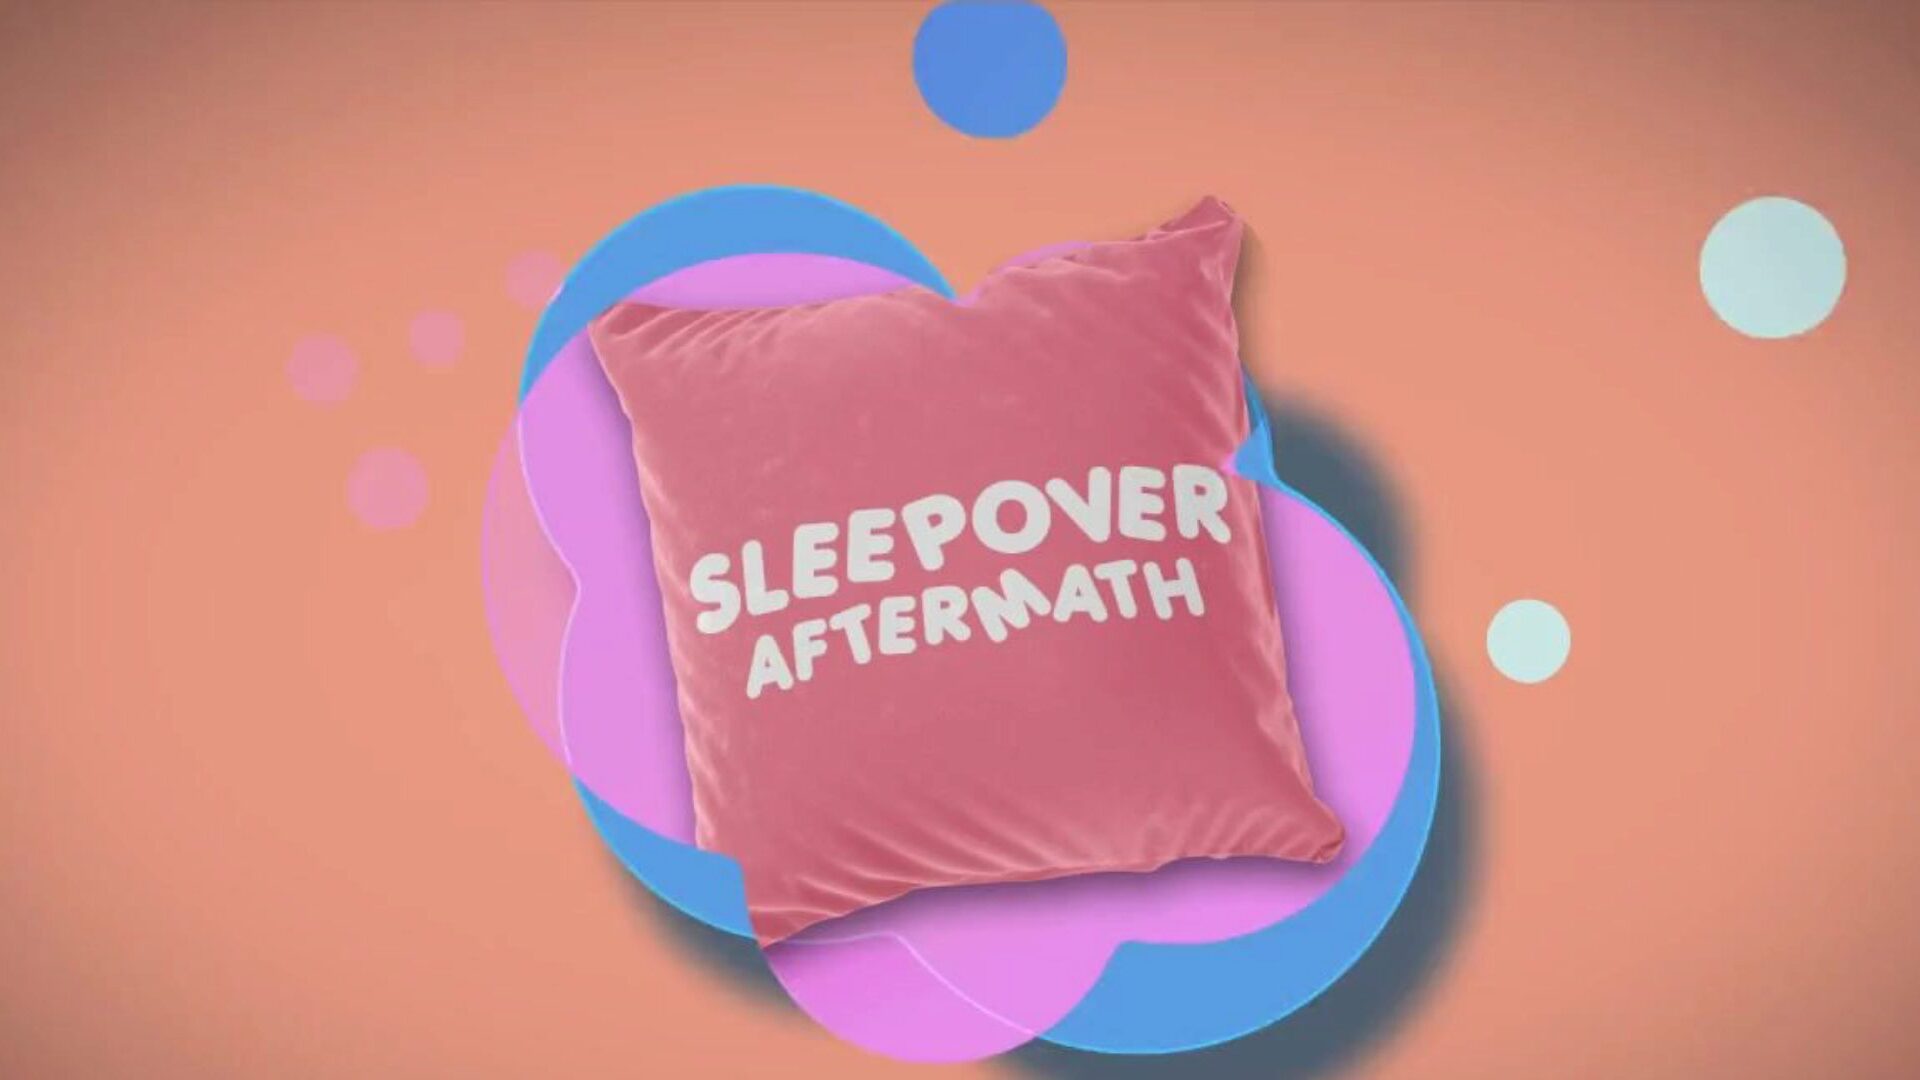 Sleepover Aftermath with Hot Teen Kira Axe